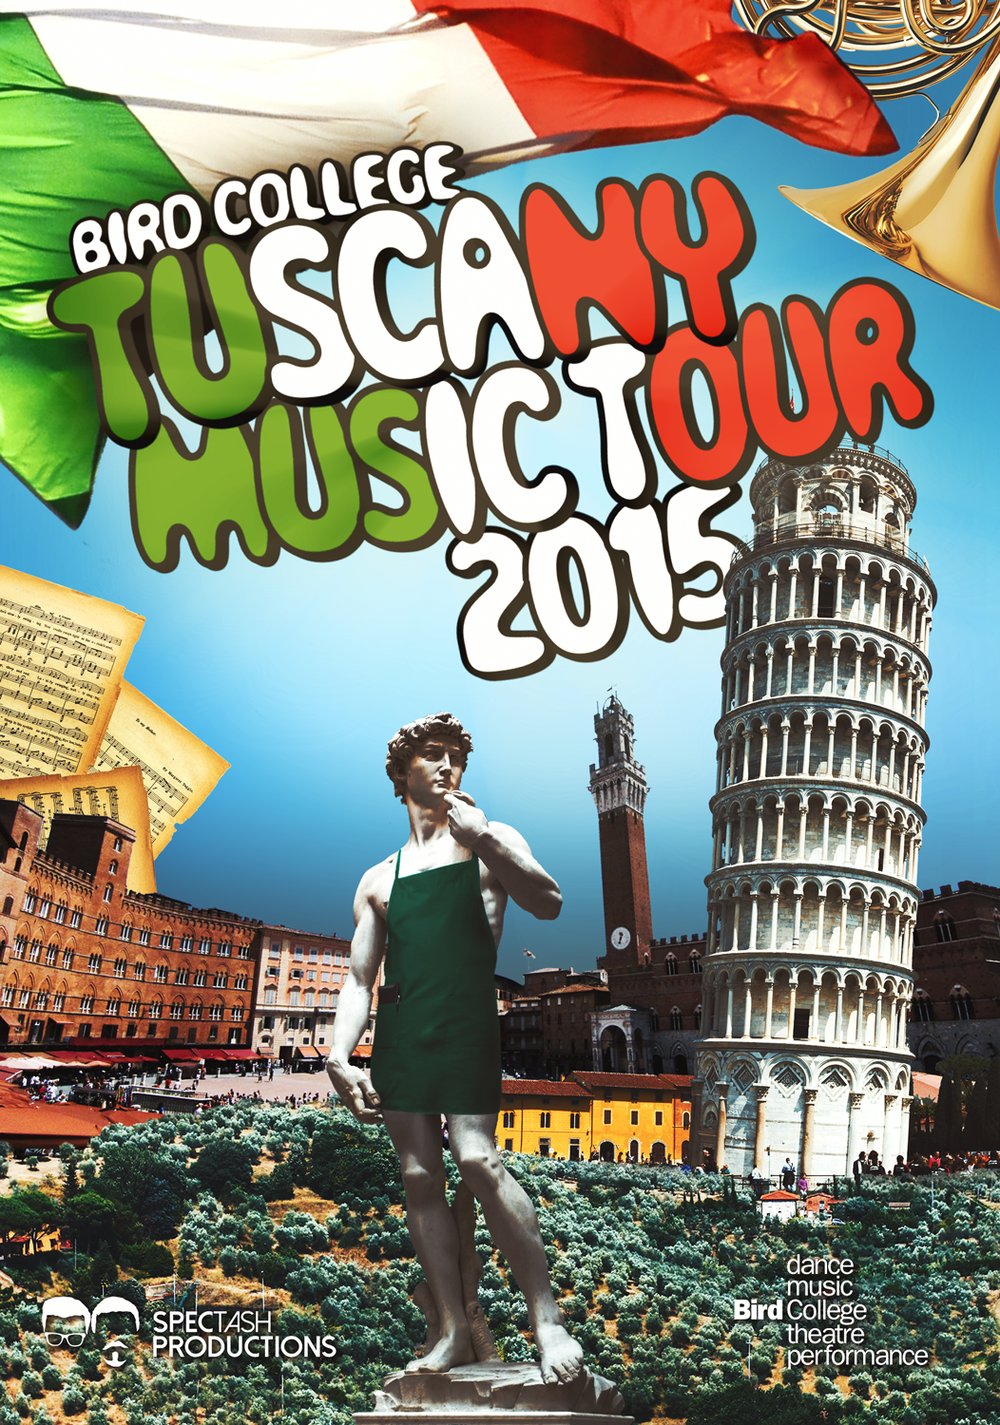 Image of Tuscany Tour 2015 - Bird College